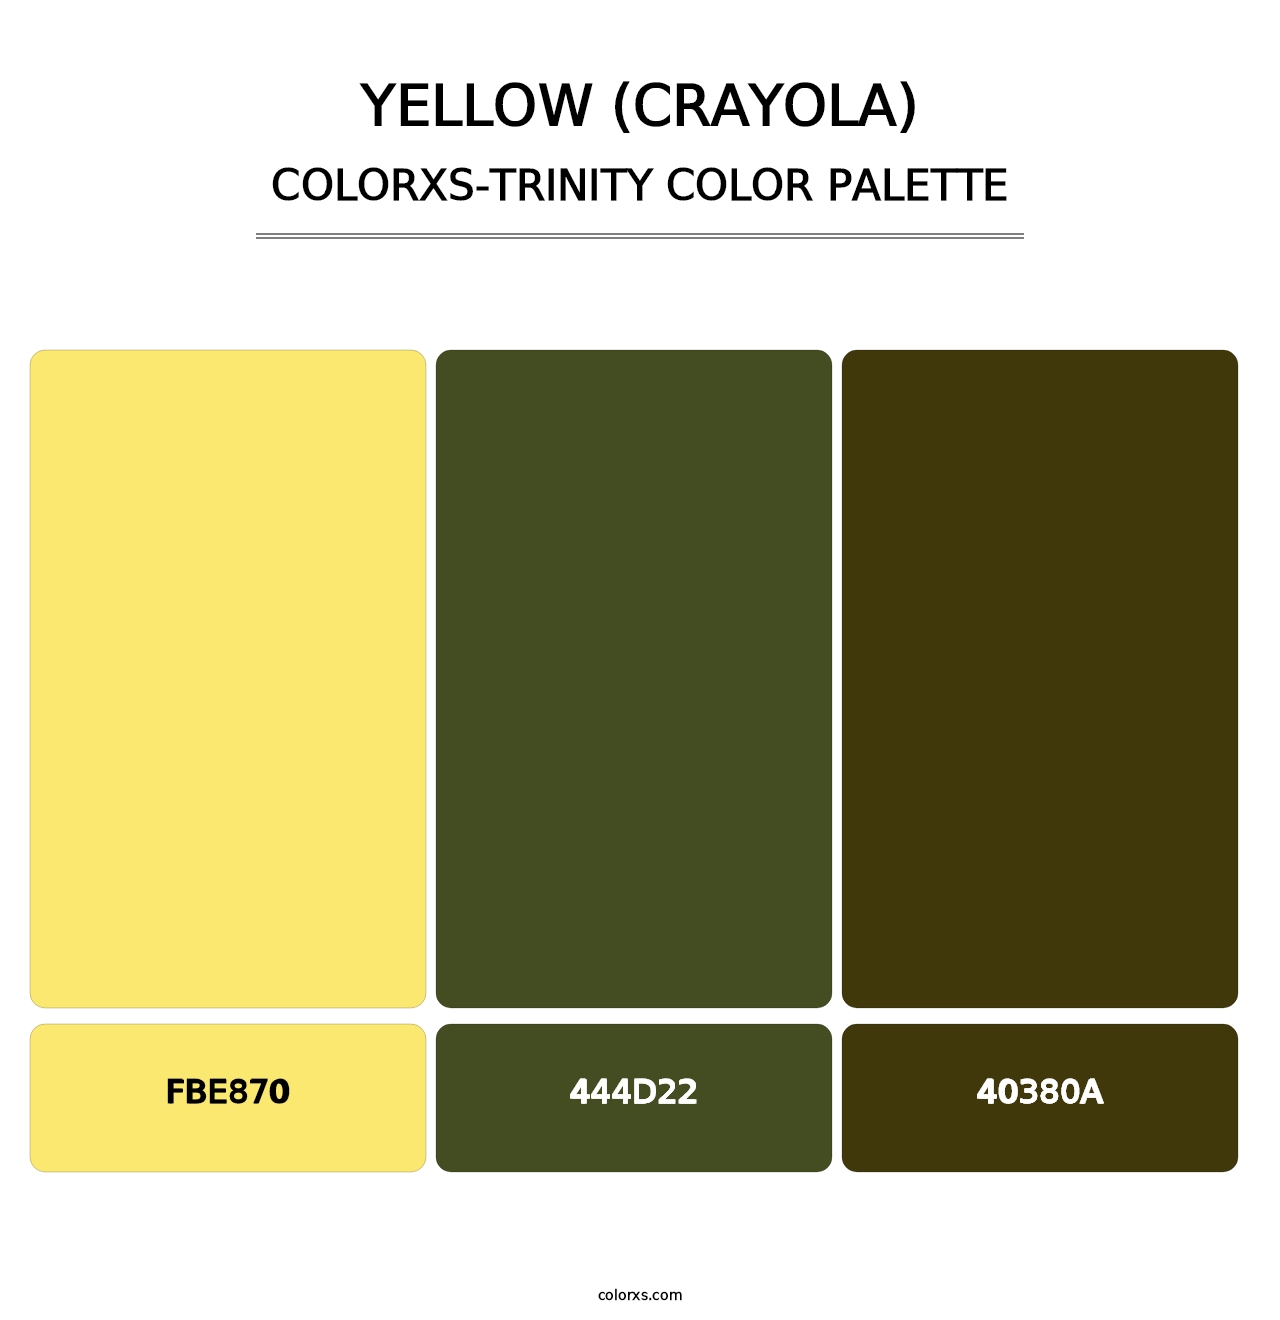 Yellow (Crayola) - Colorxs Trinity Palette